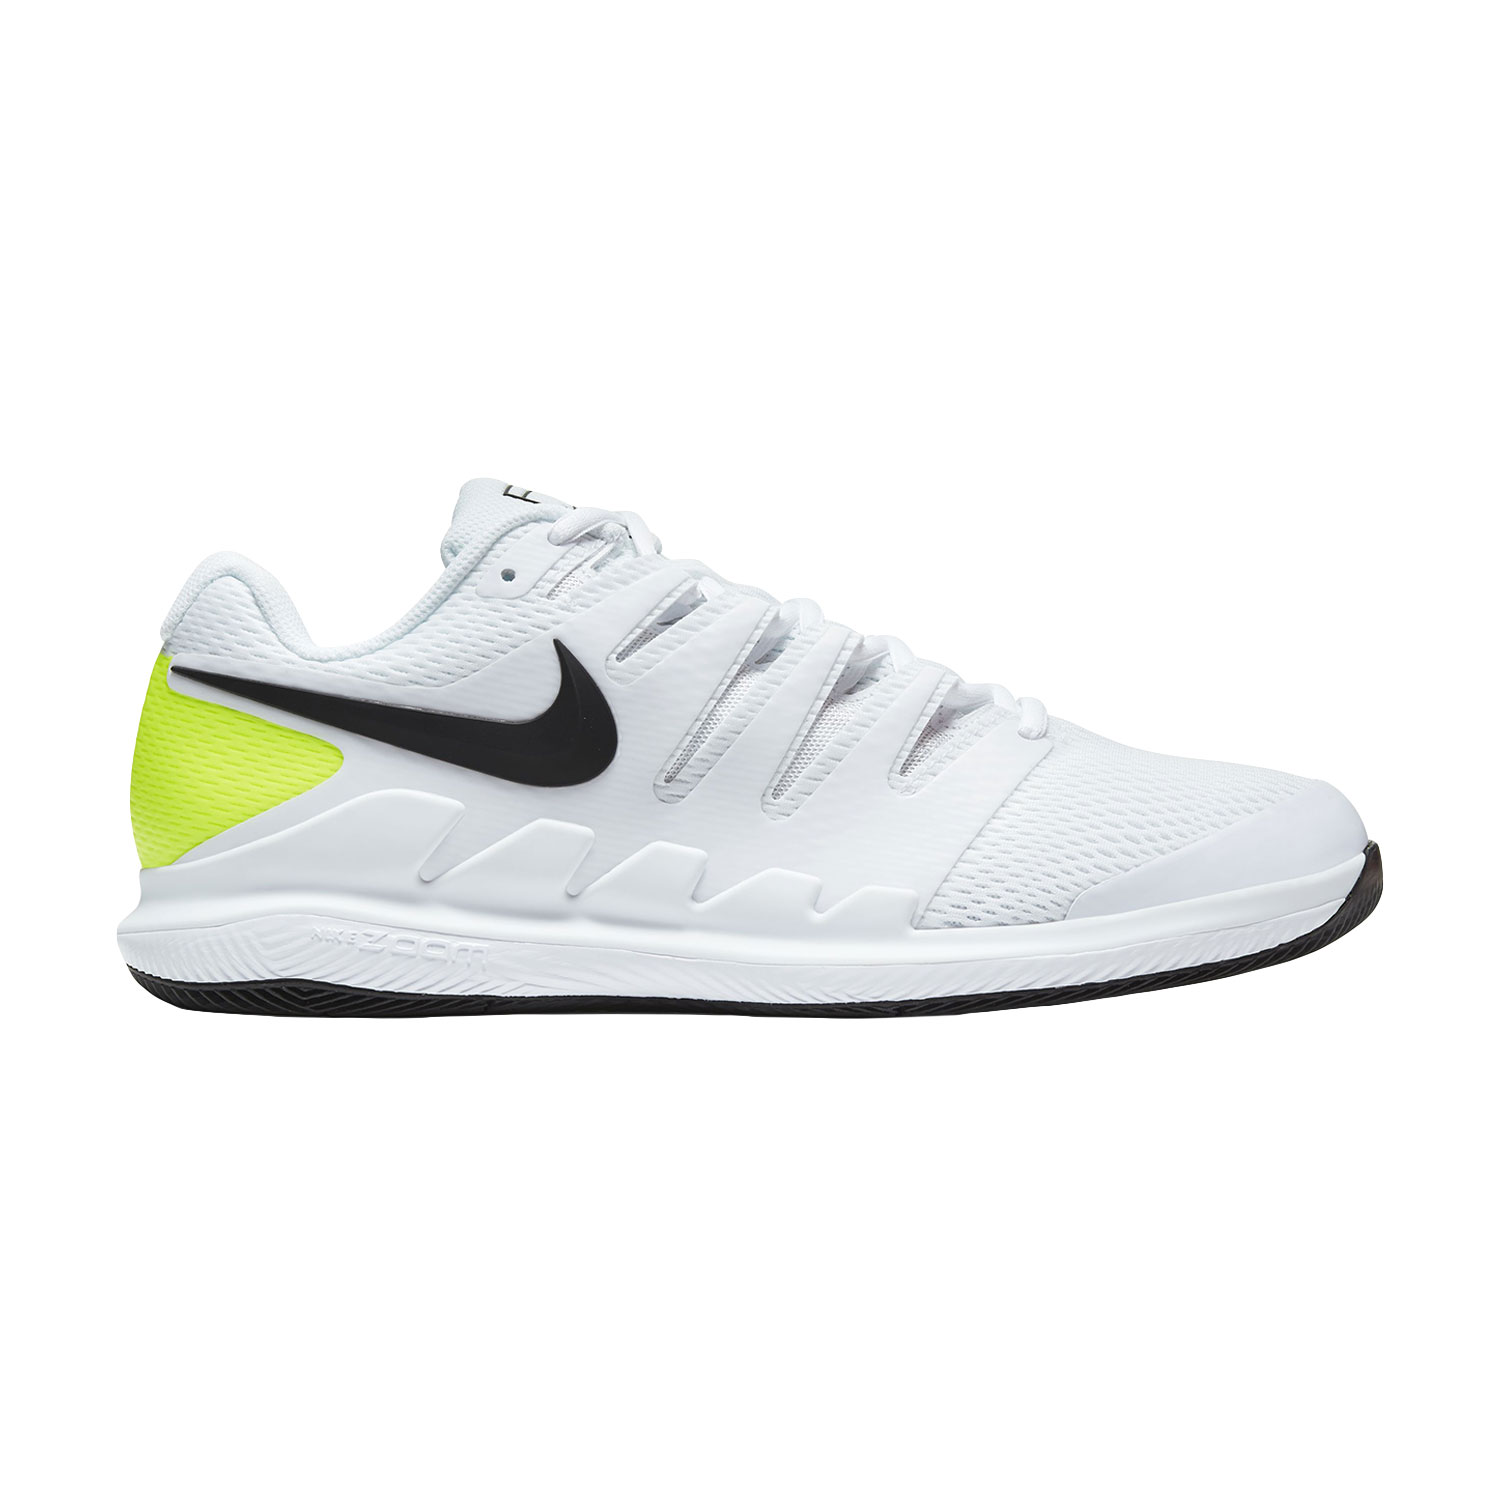 Nike Zoom Vapor X Men's Tennis Shoes - White/Black/Volt